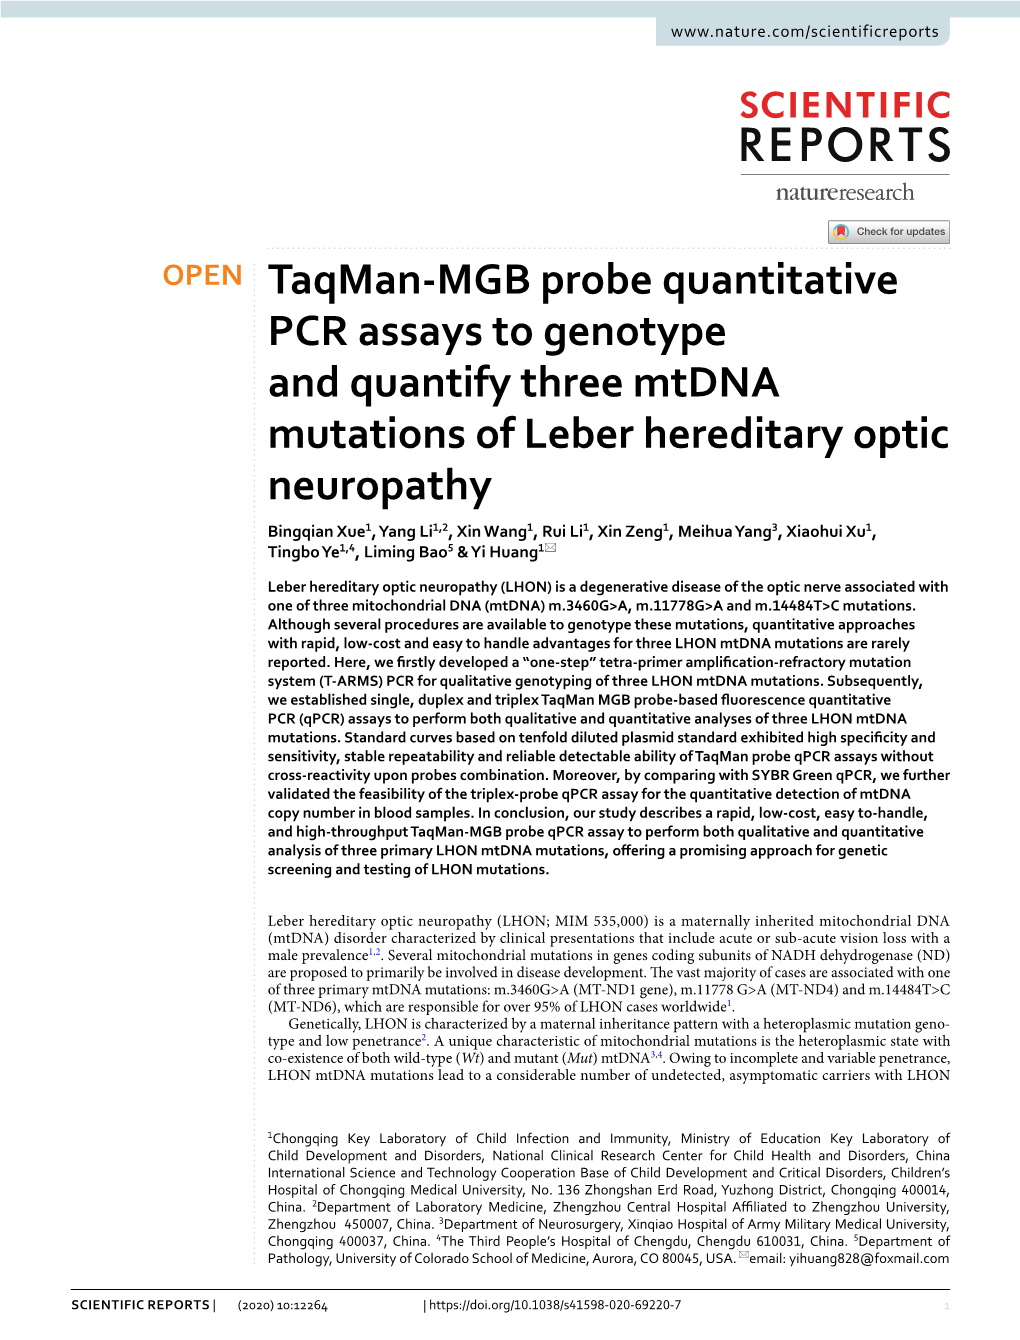 Taqman-MGB Probe Quantitative PCR Assays to Genotype And